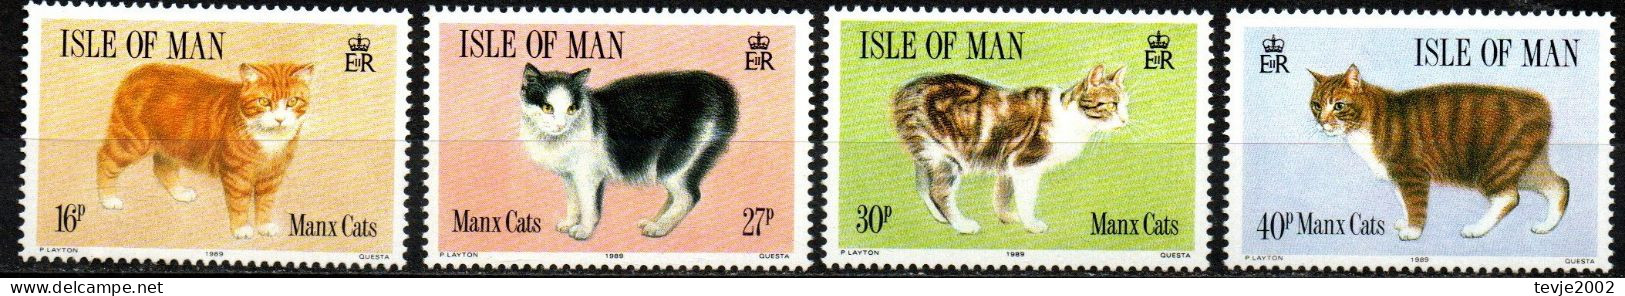 Isle Of Man 1989 - Mi.Nr. 383 - 389 - Postfrisch MNH - Tiere Animals Katzen Cats - Domestic Cats